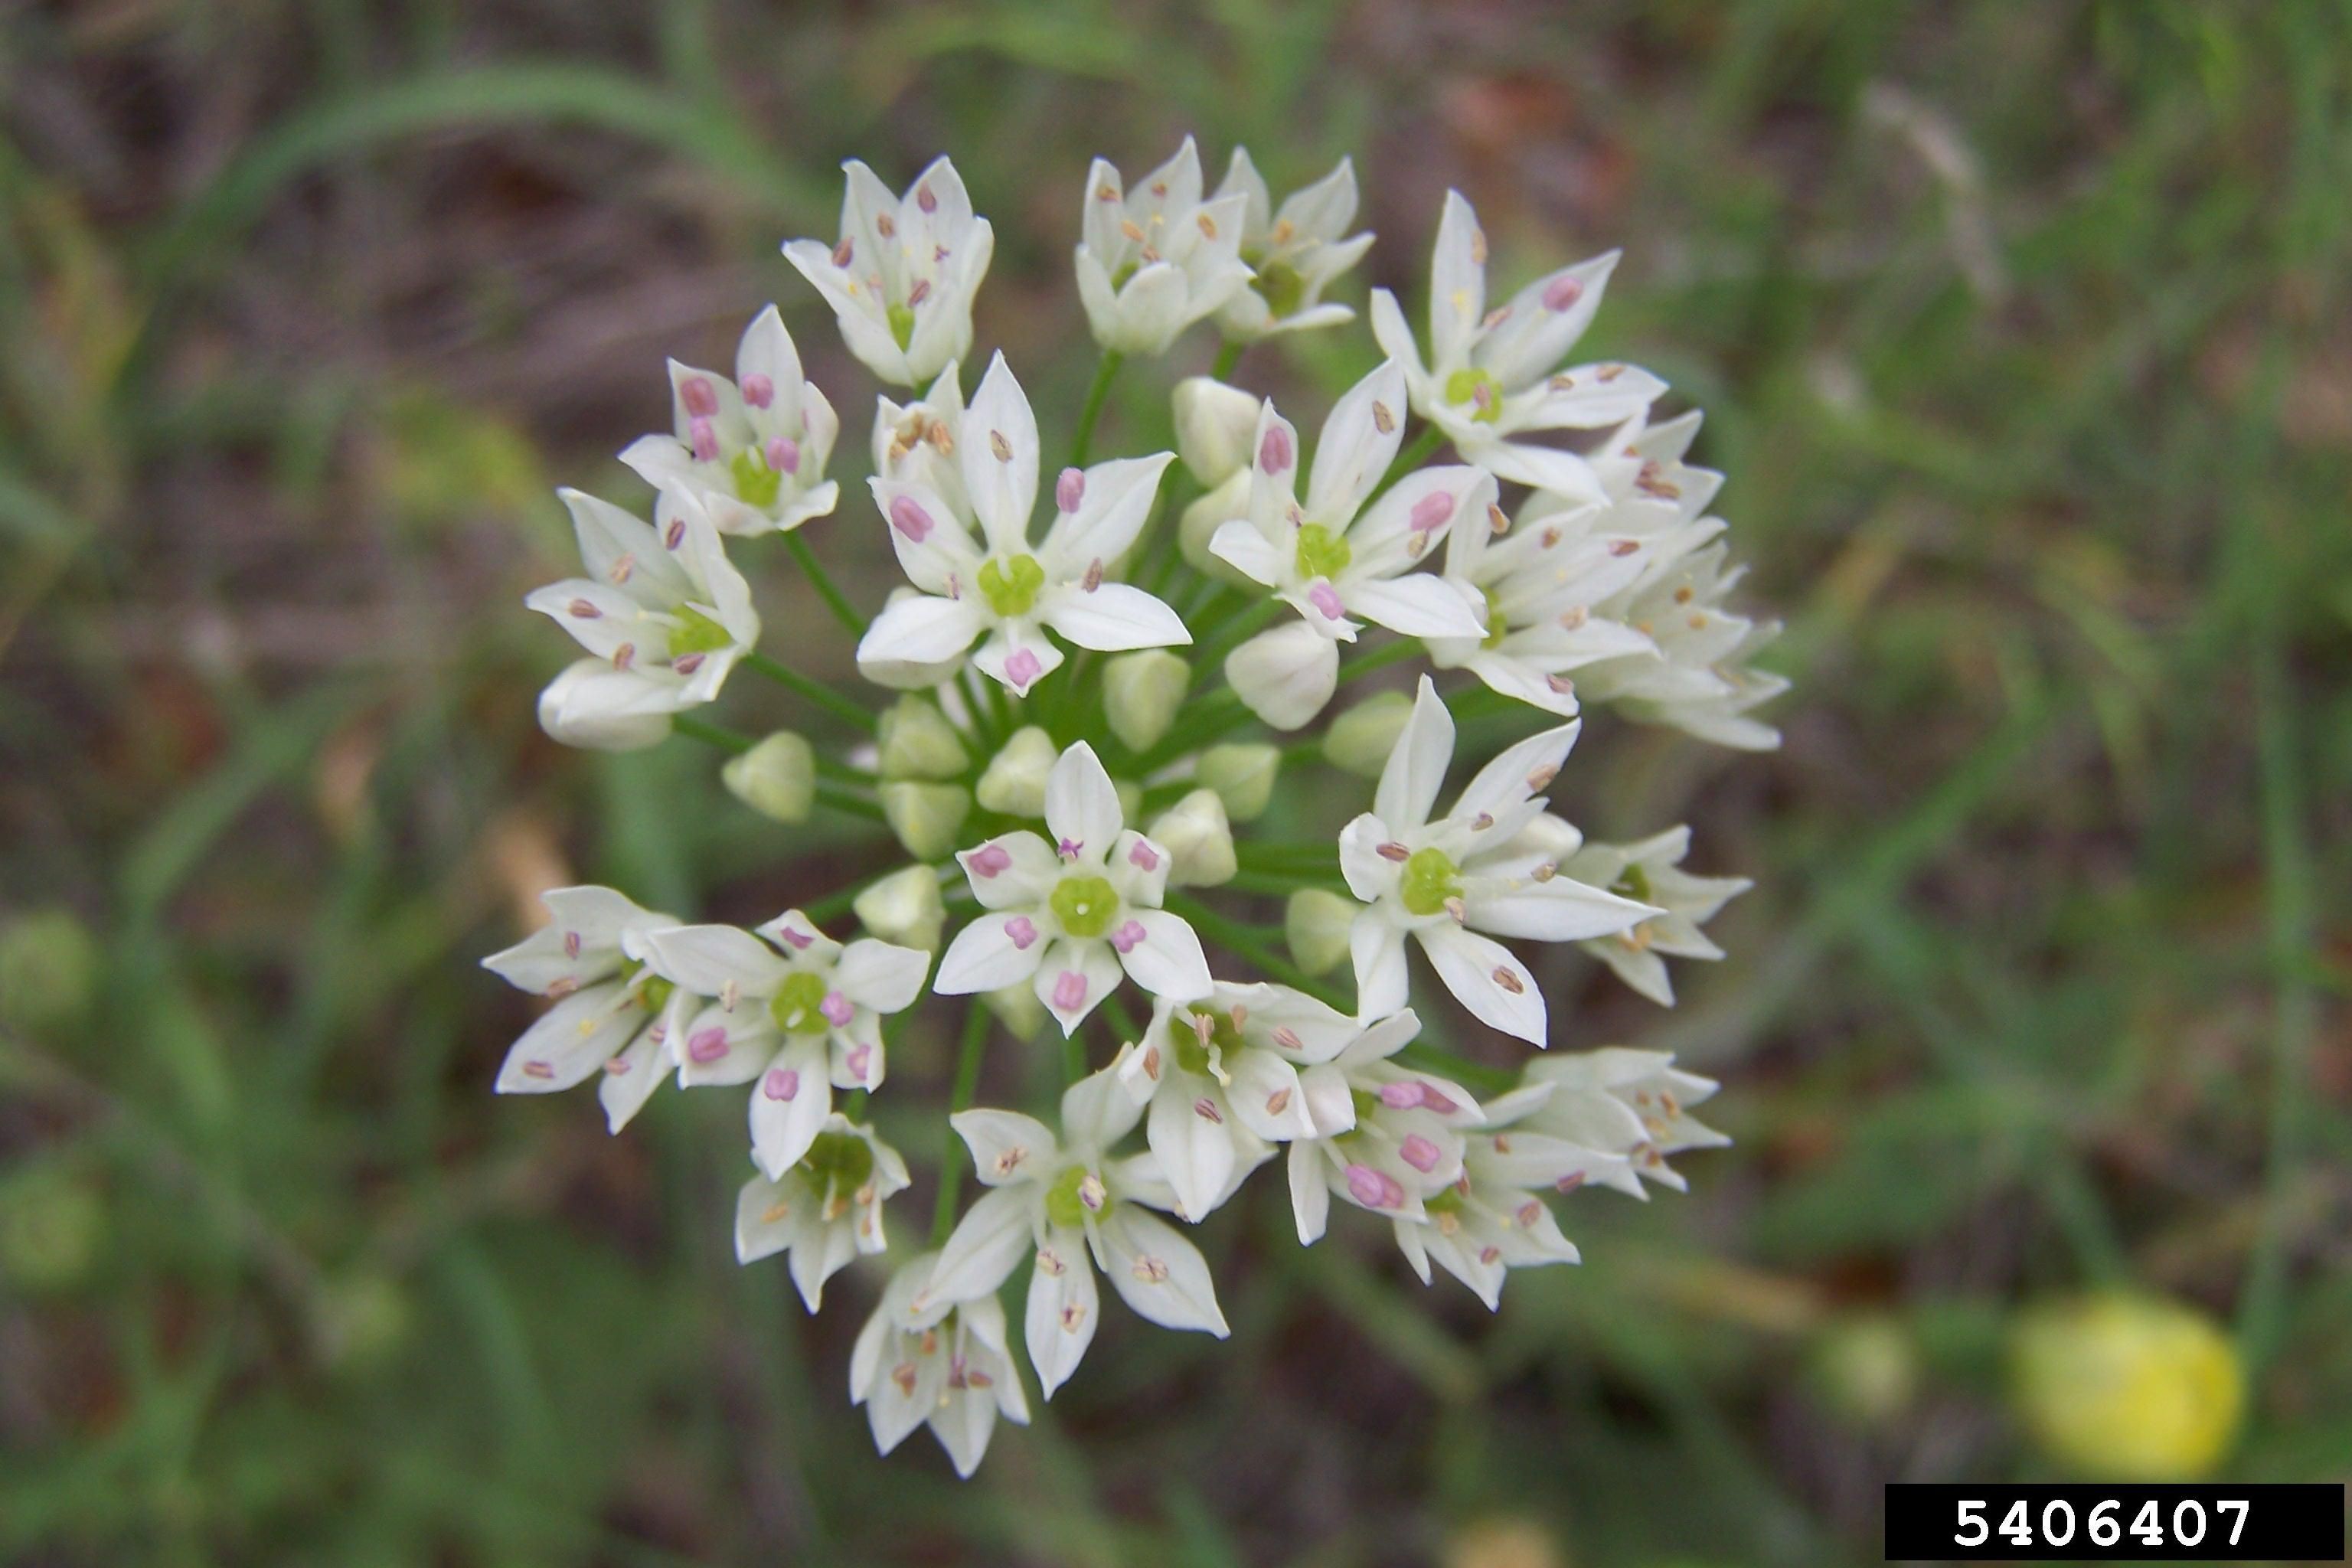 Star-shaped flowers of wild garlic. 